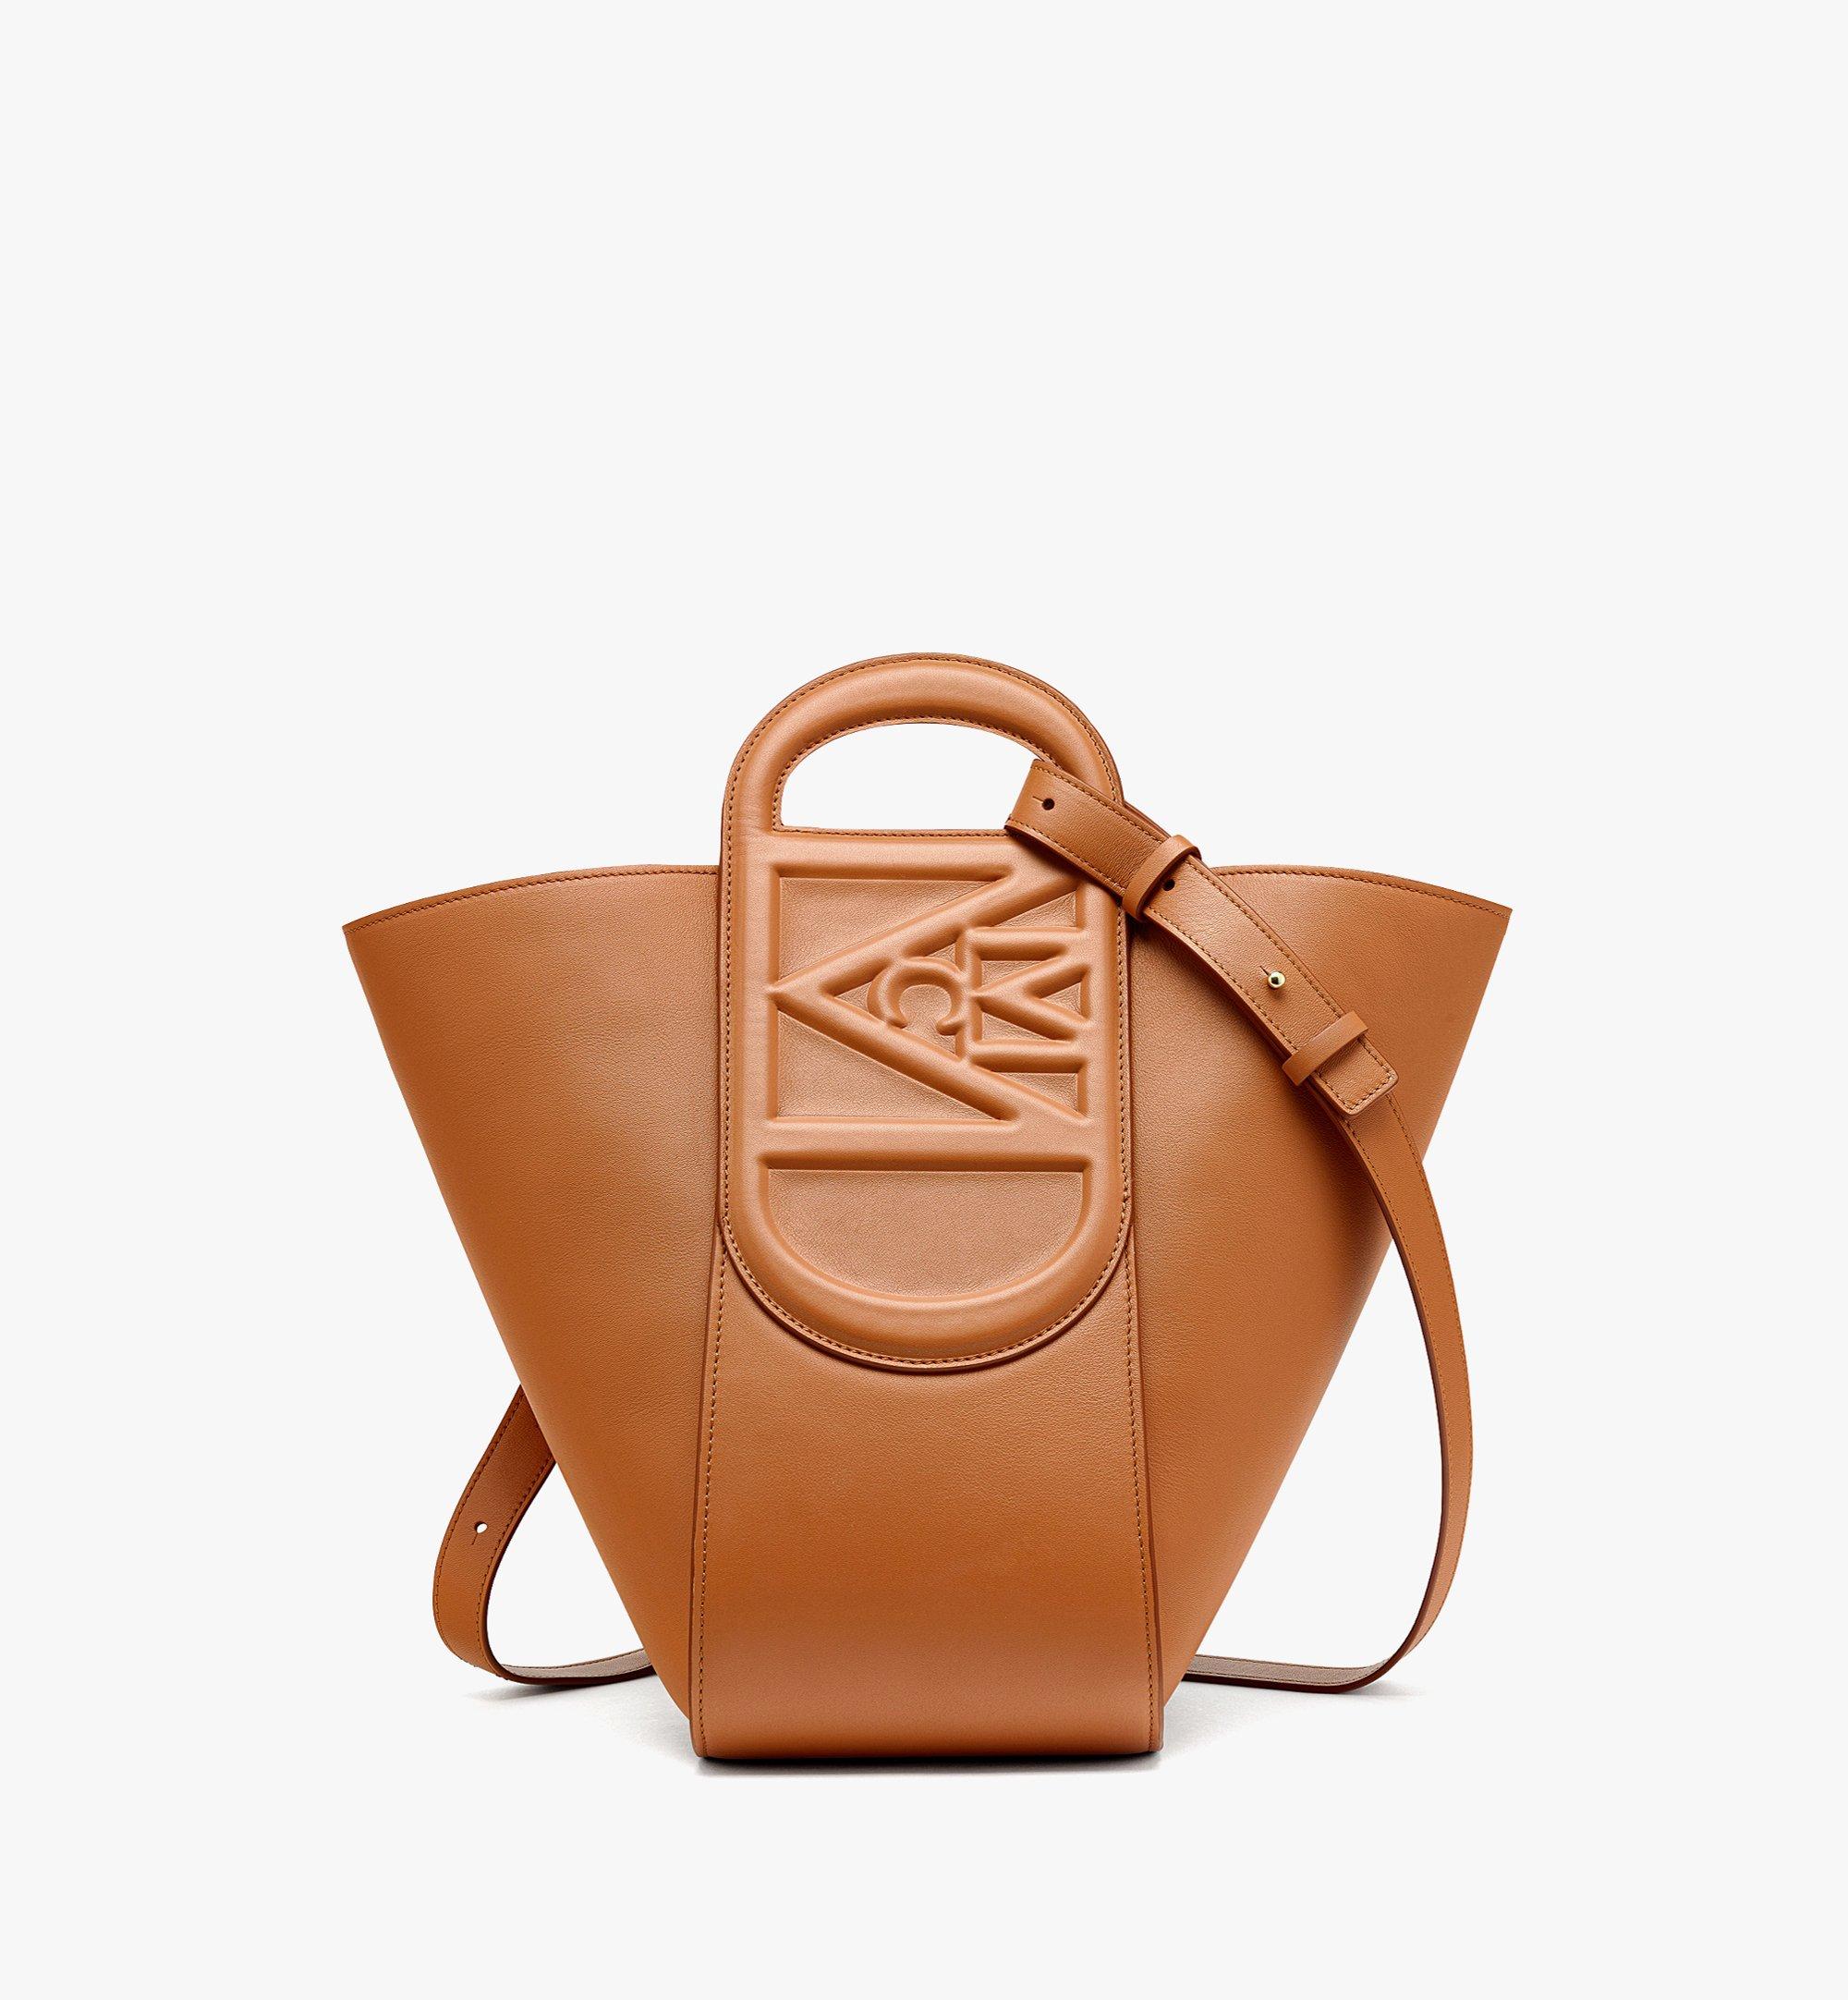 MCM: handbag for woman - Black  Mcm handbag MMBDATA02 online at